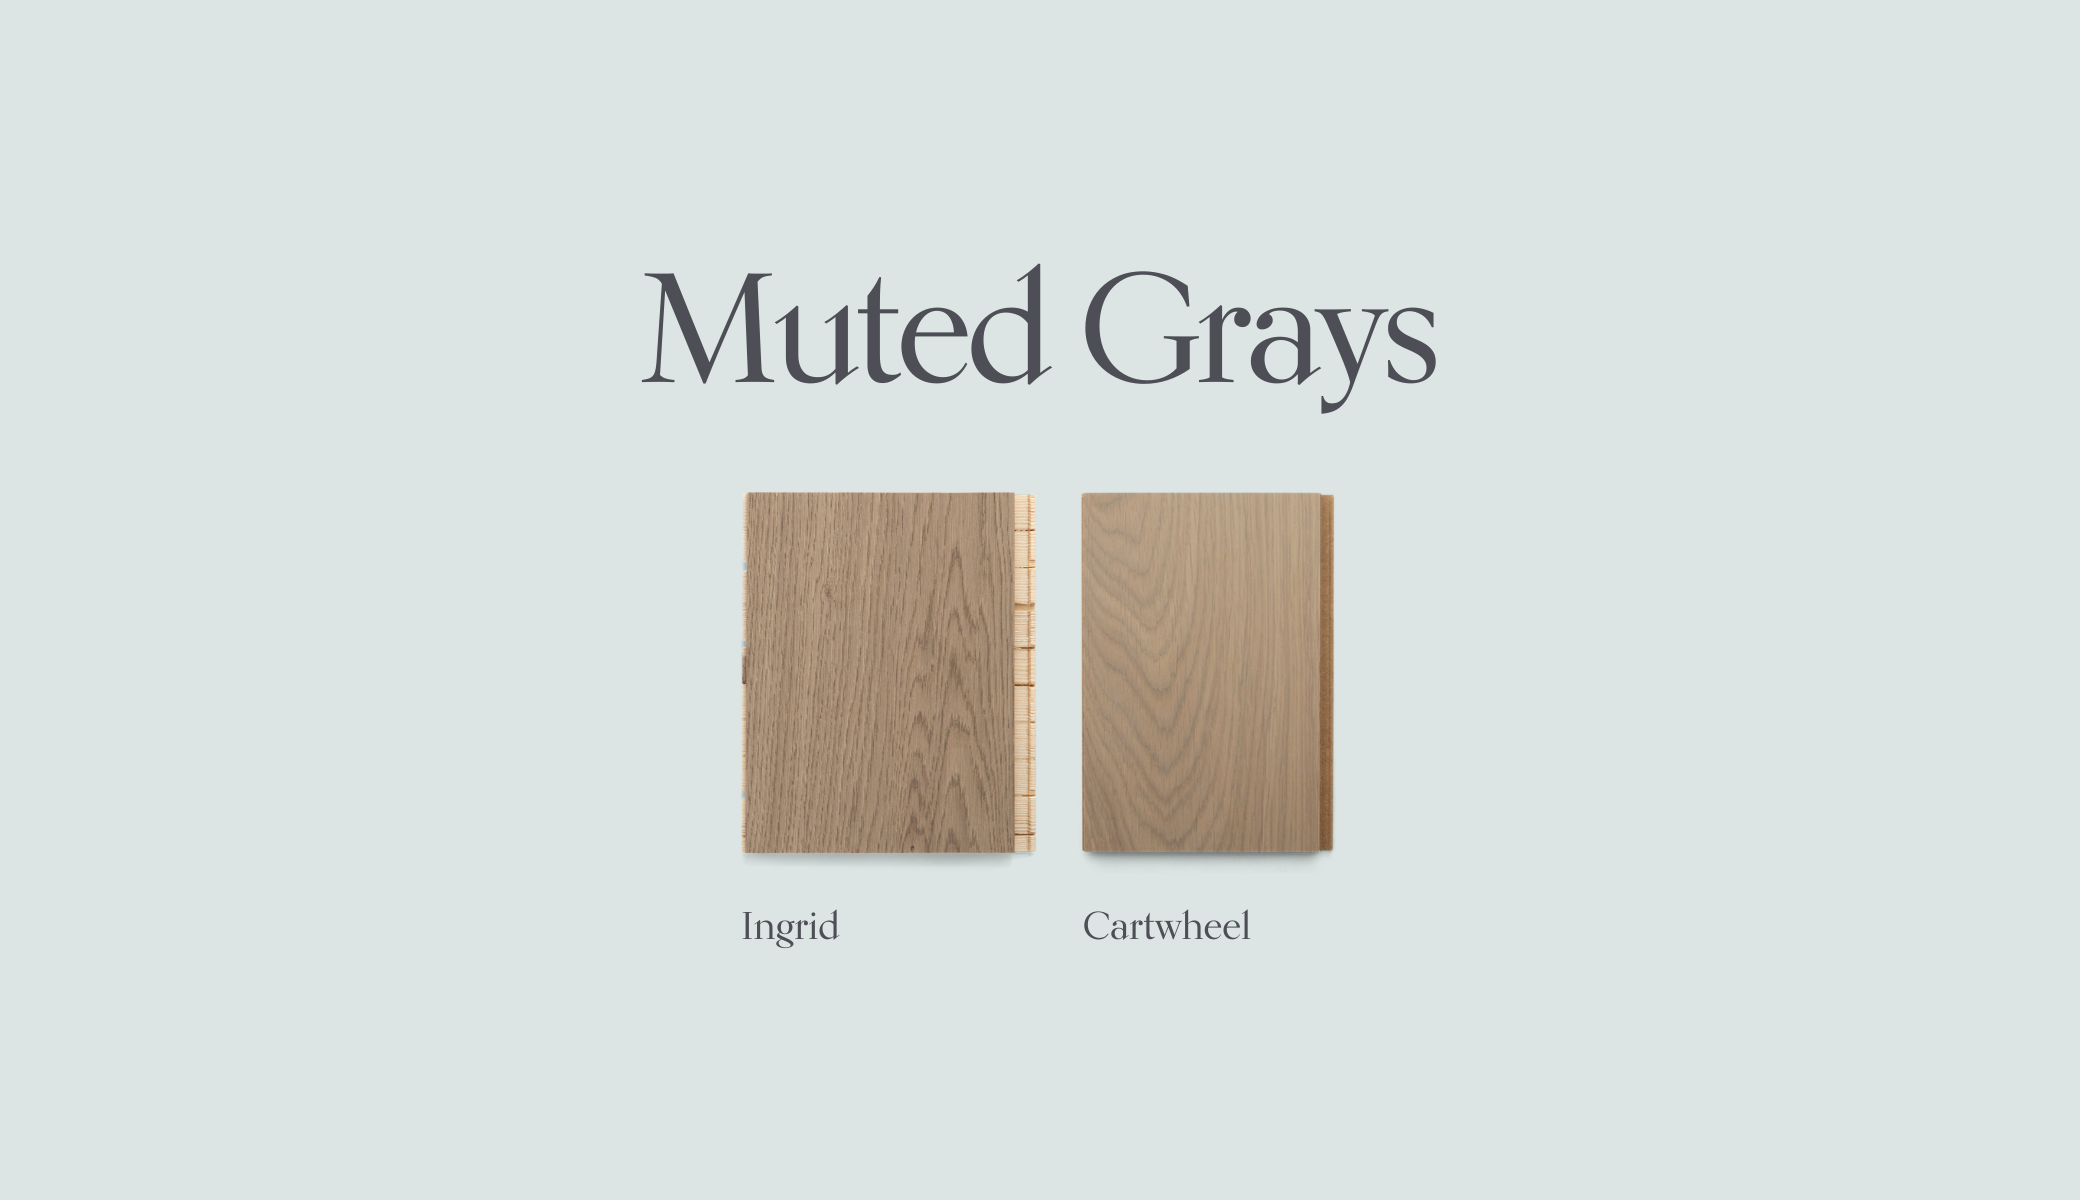 muted gray hardwood floors by Stuga